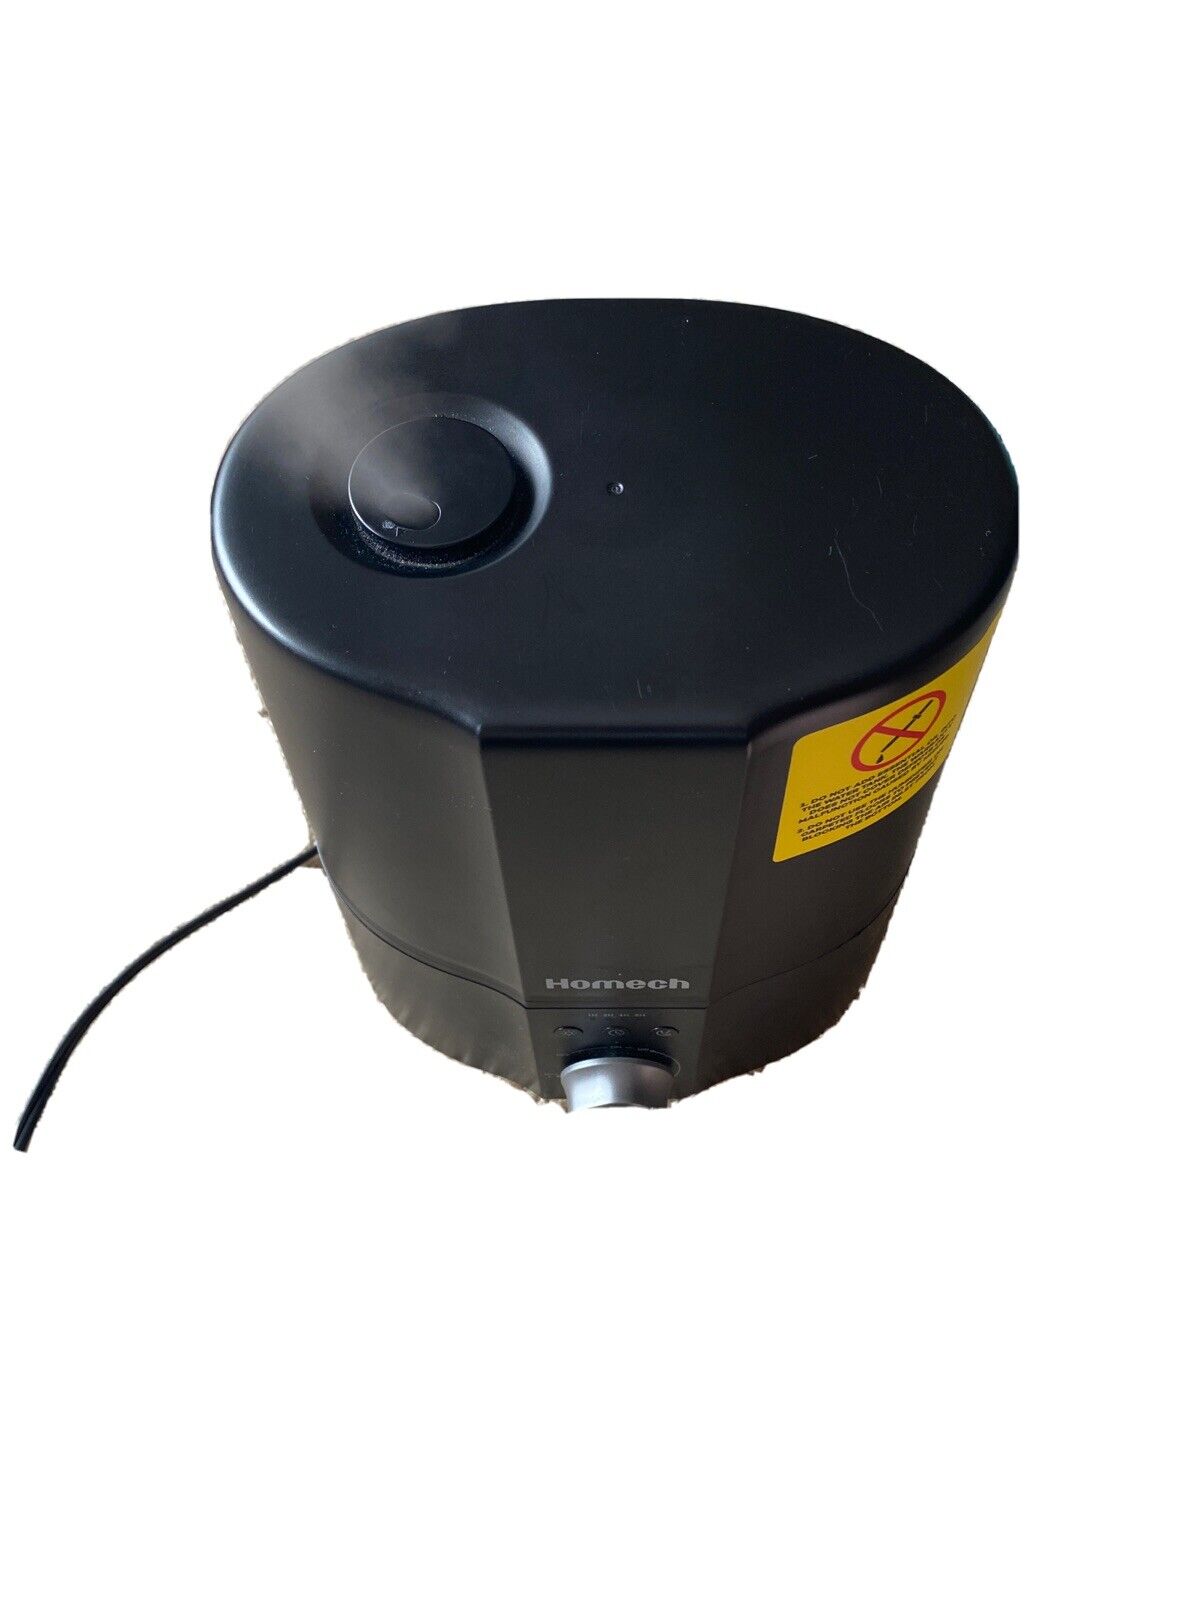 Homech HM-AH004 Cool Mist Humidifier 28dB Quiet Ultrasonic Humidifiers DI44_K